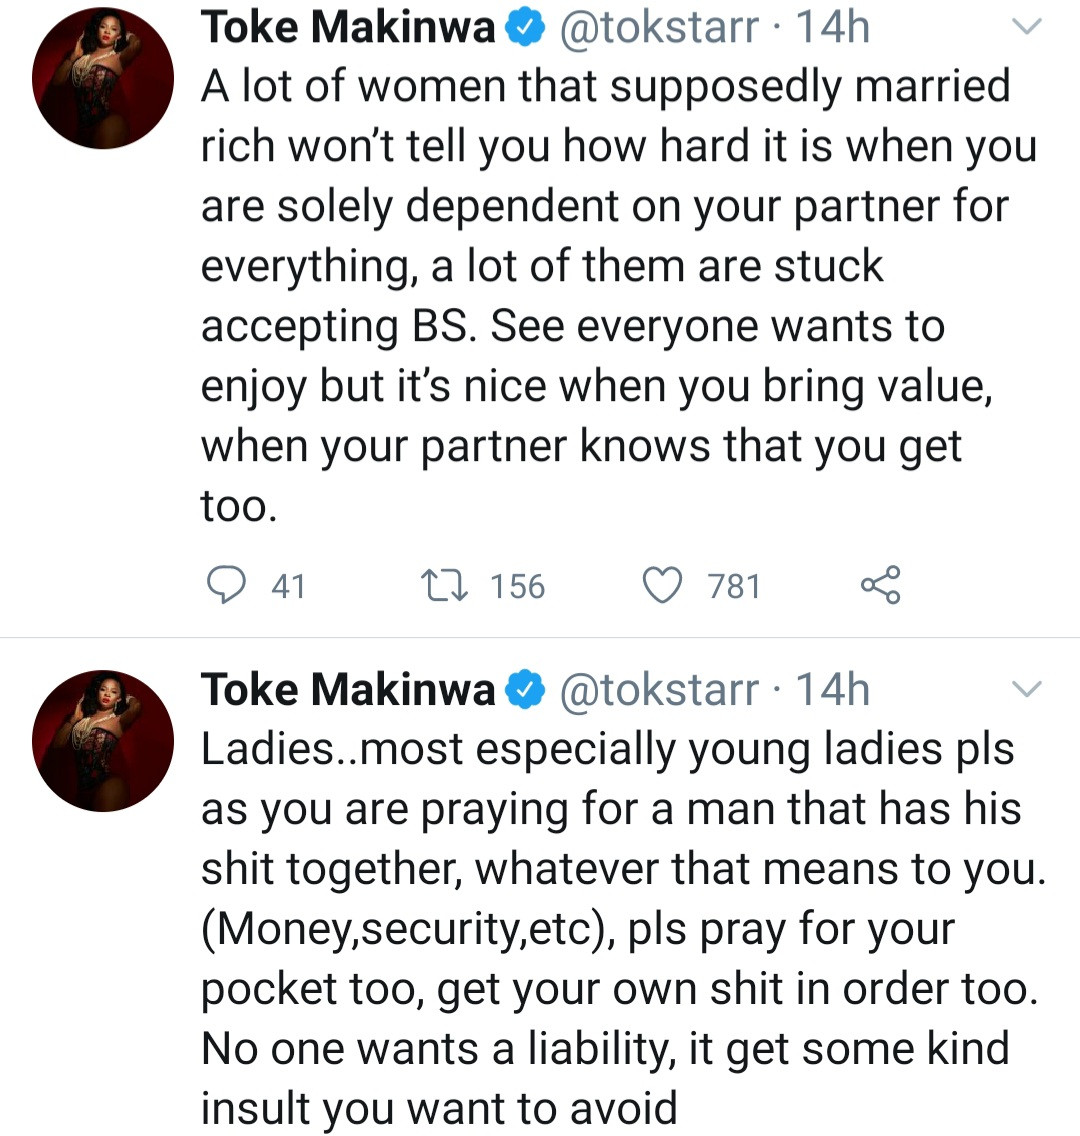 Toke Makinwa explains why women need to make their own money while praying for a man 